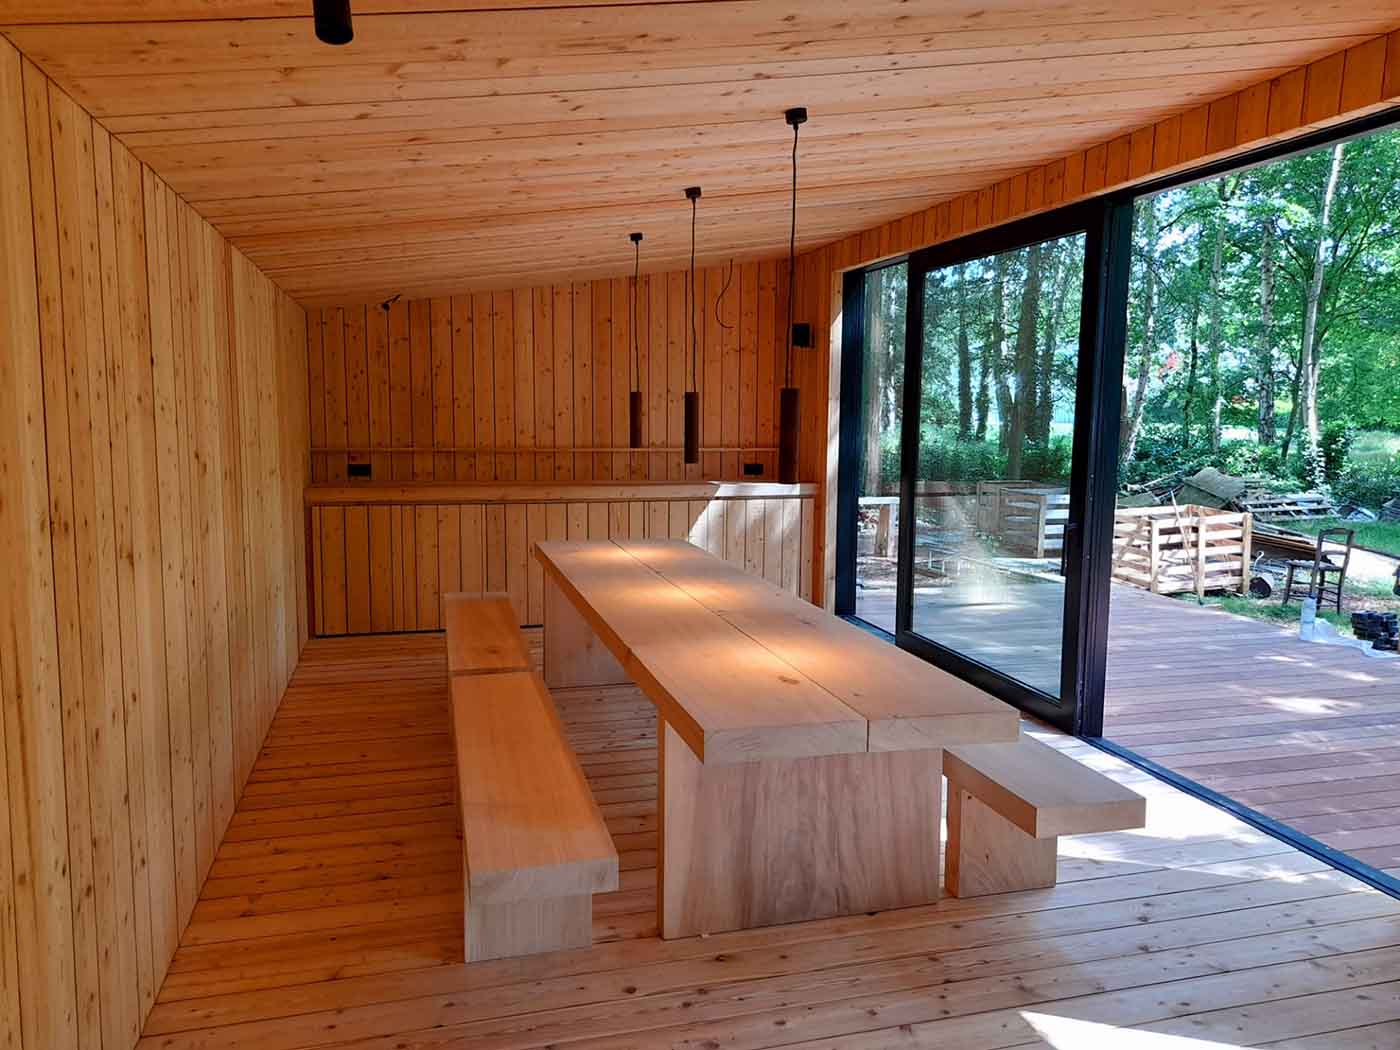 Houten poolhouse, tuinhuis, carport, fietsenberging - home office | Timber Projects - Home Office Lariks Bonheiden